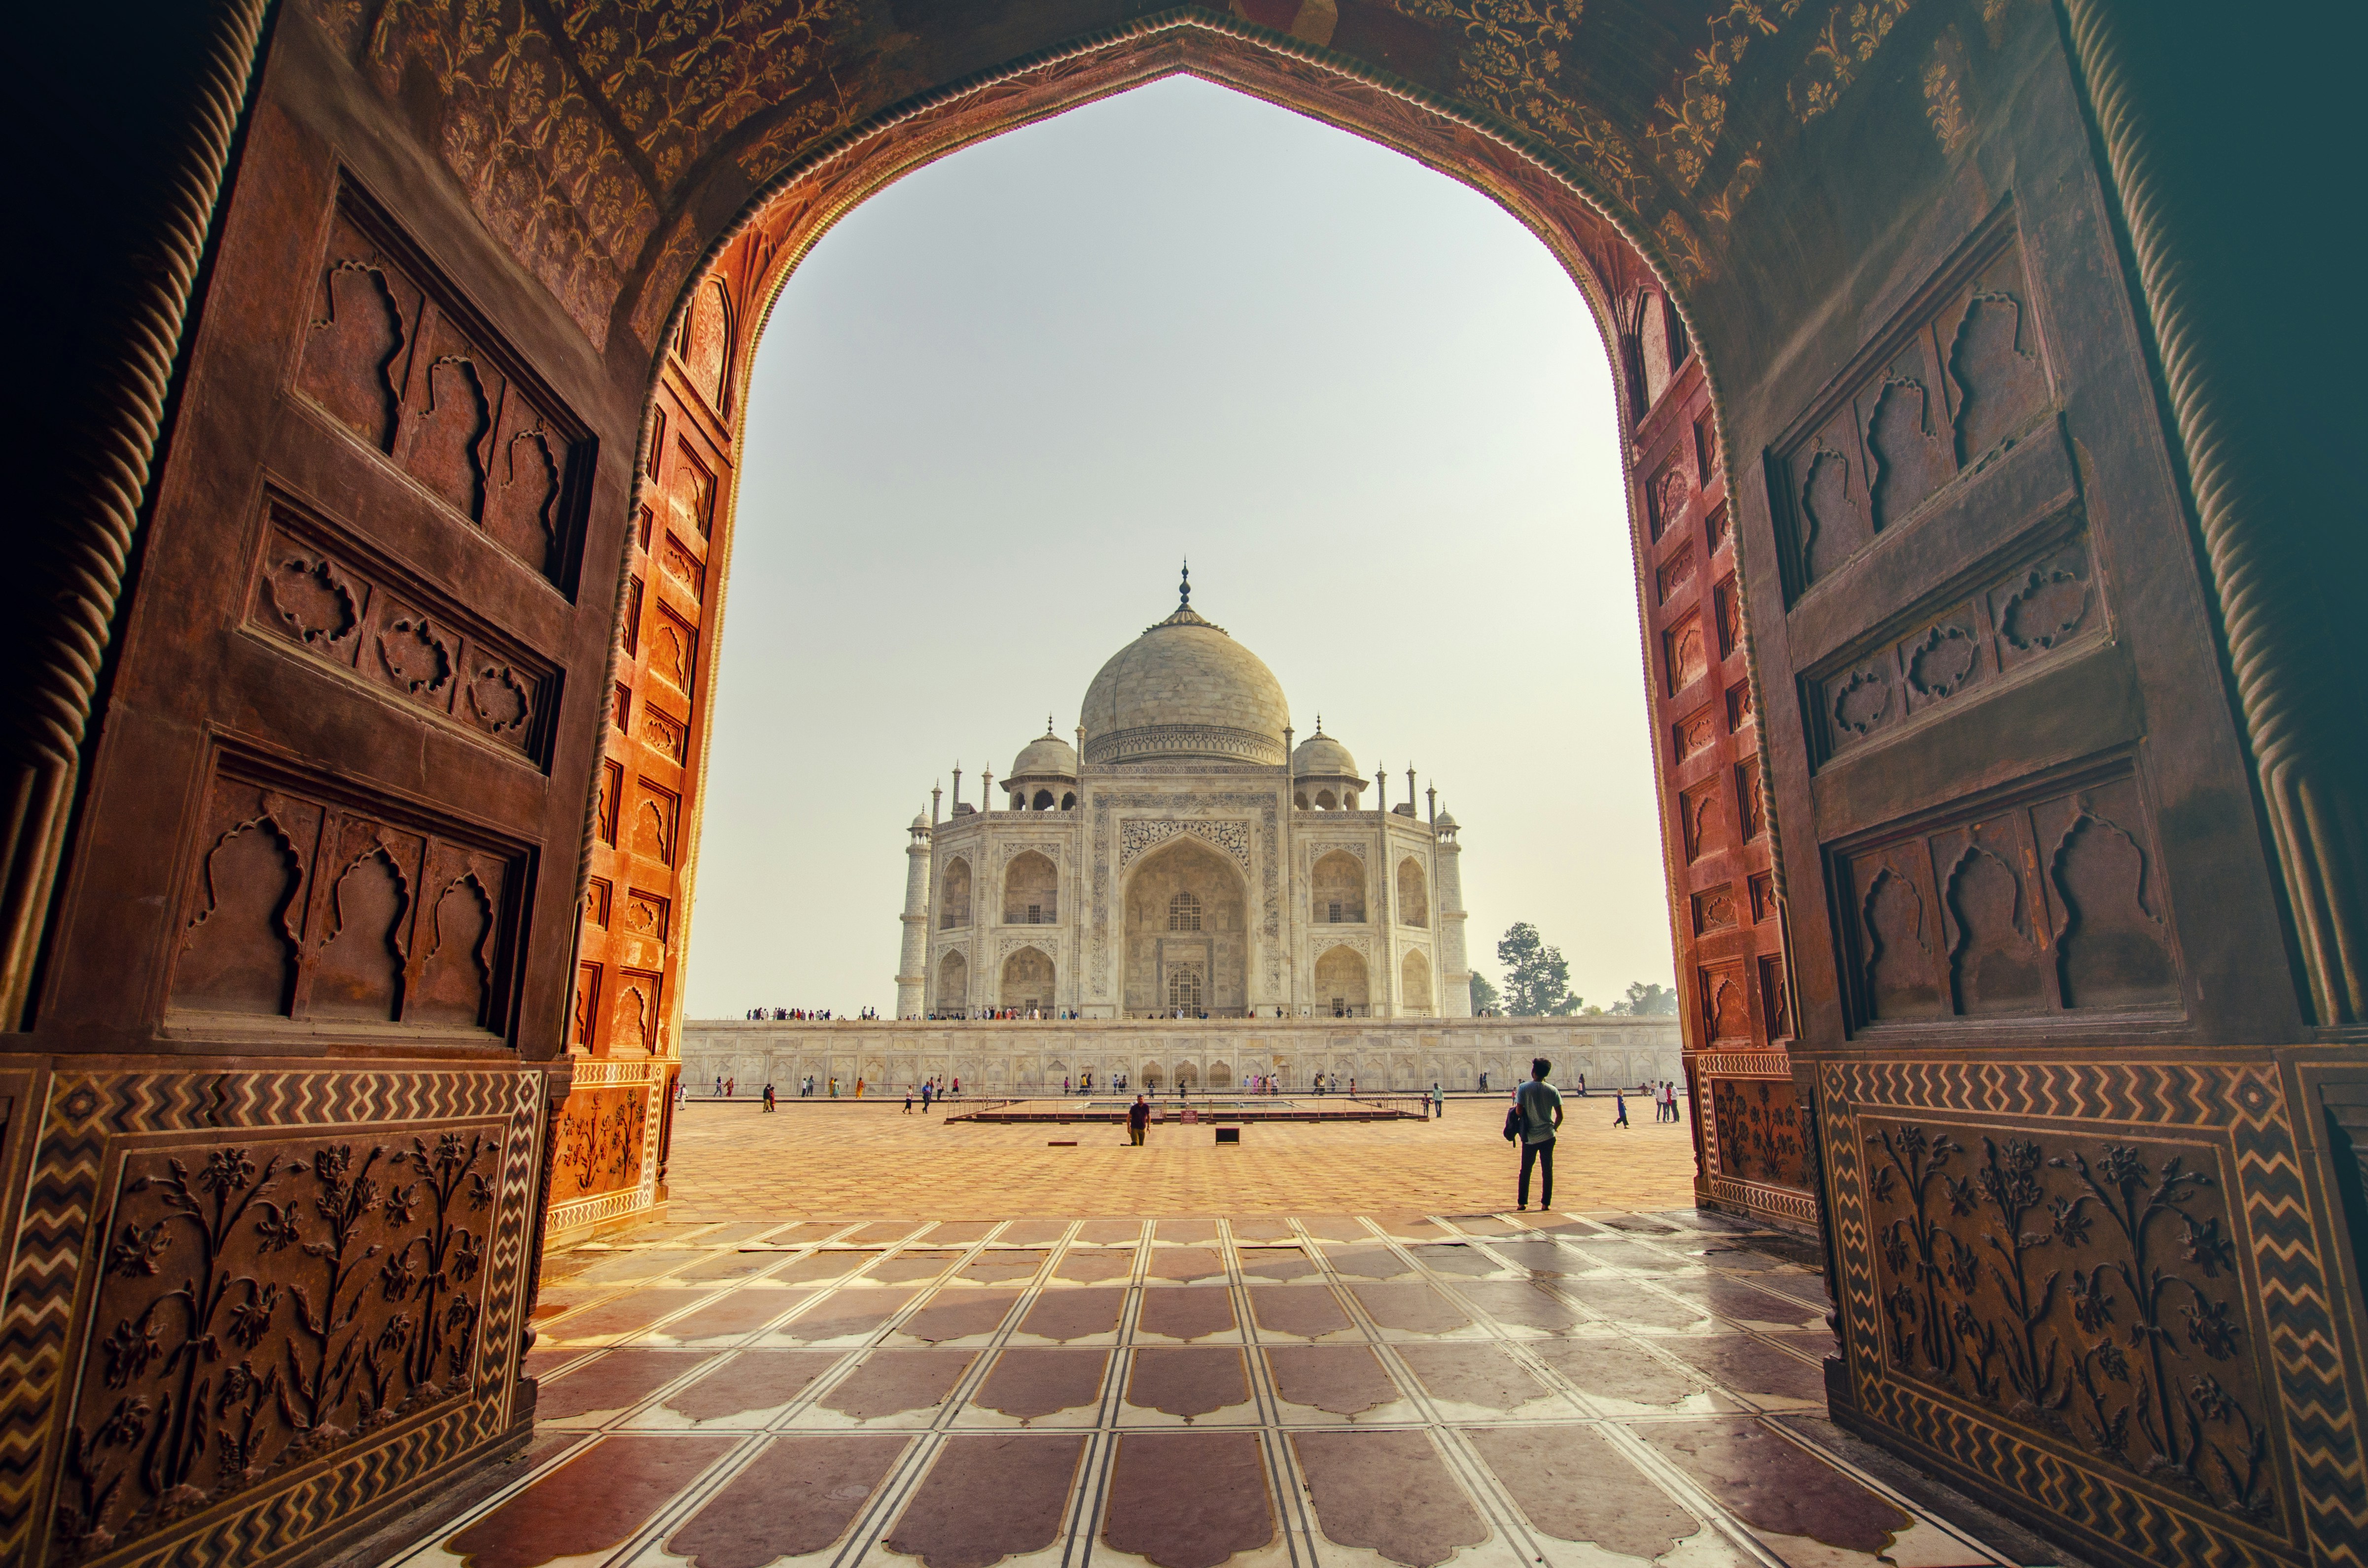 750 Taj Mahal Pictures Scenic Travel Photos Download